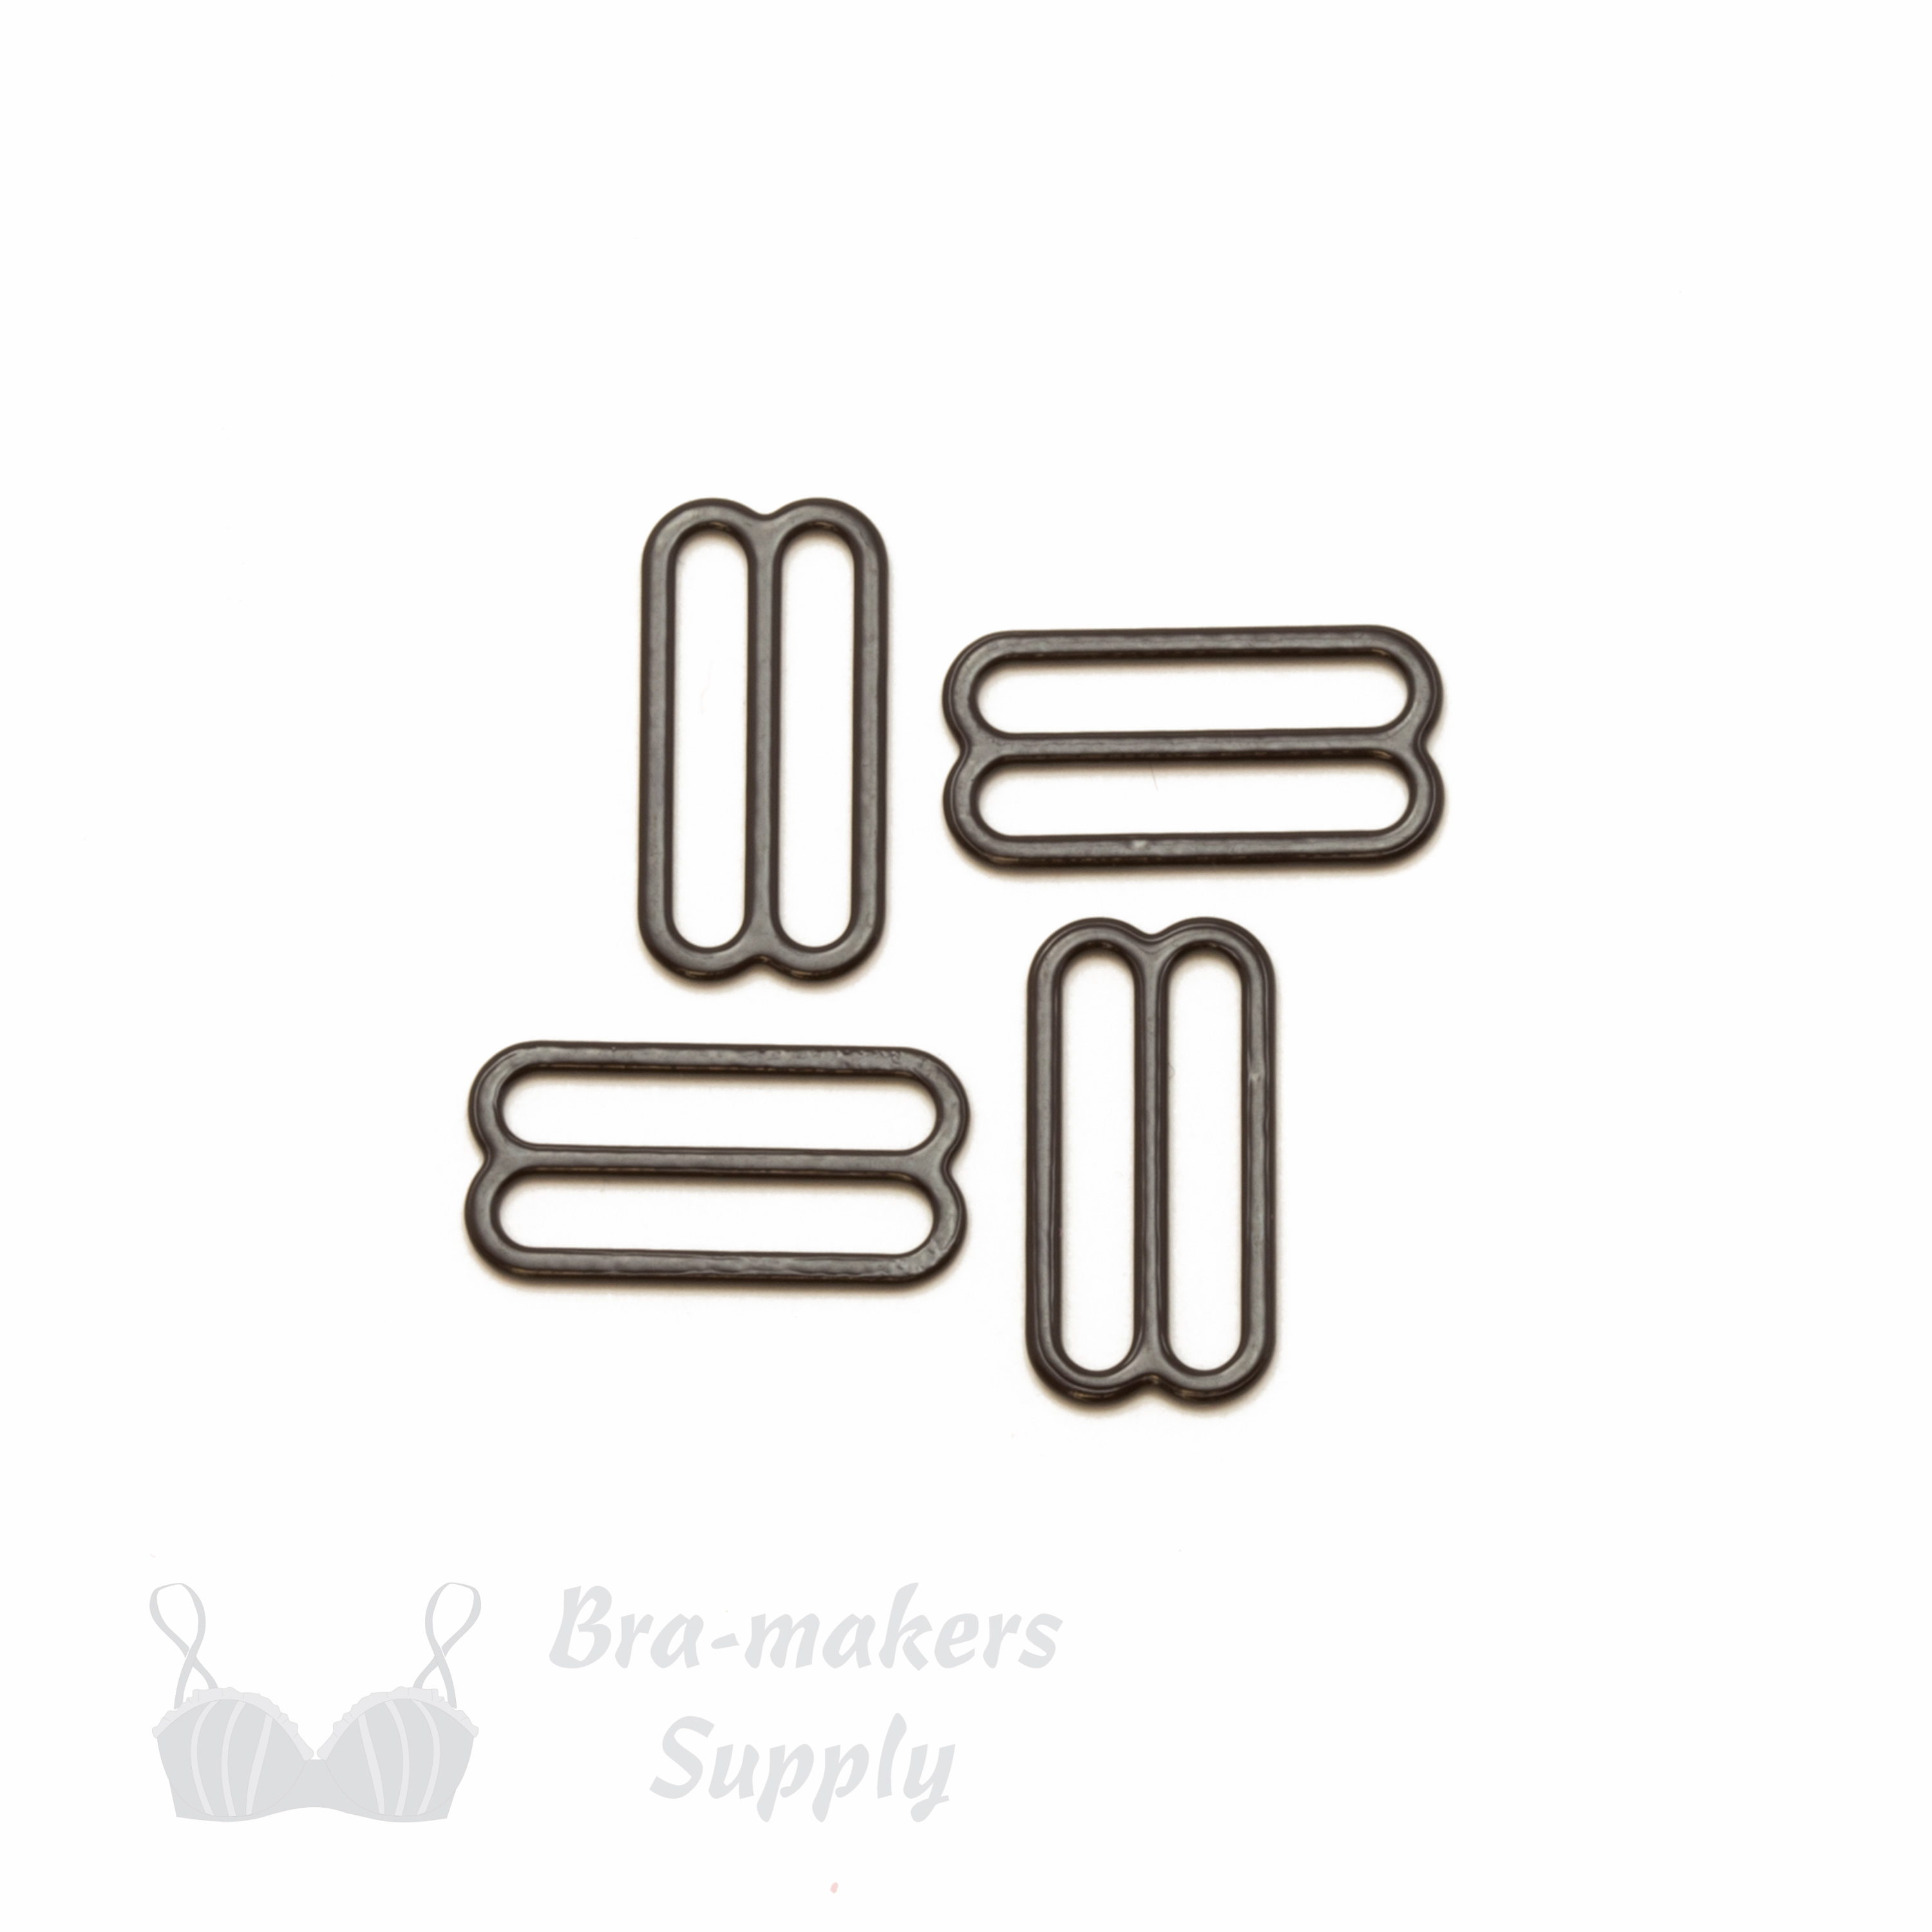 three quarters inch 19mm RM-60 S PK4 chocolate nylon coated metal rings sliders or seal brown Pantone 19-1314 from Bra-Makers Supply 4 sliders shown